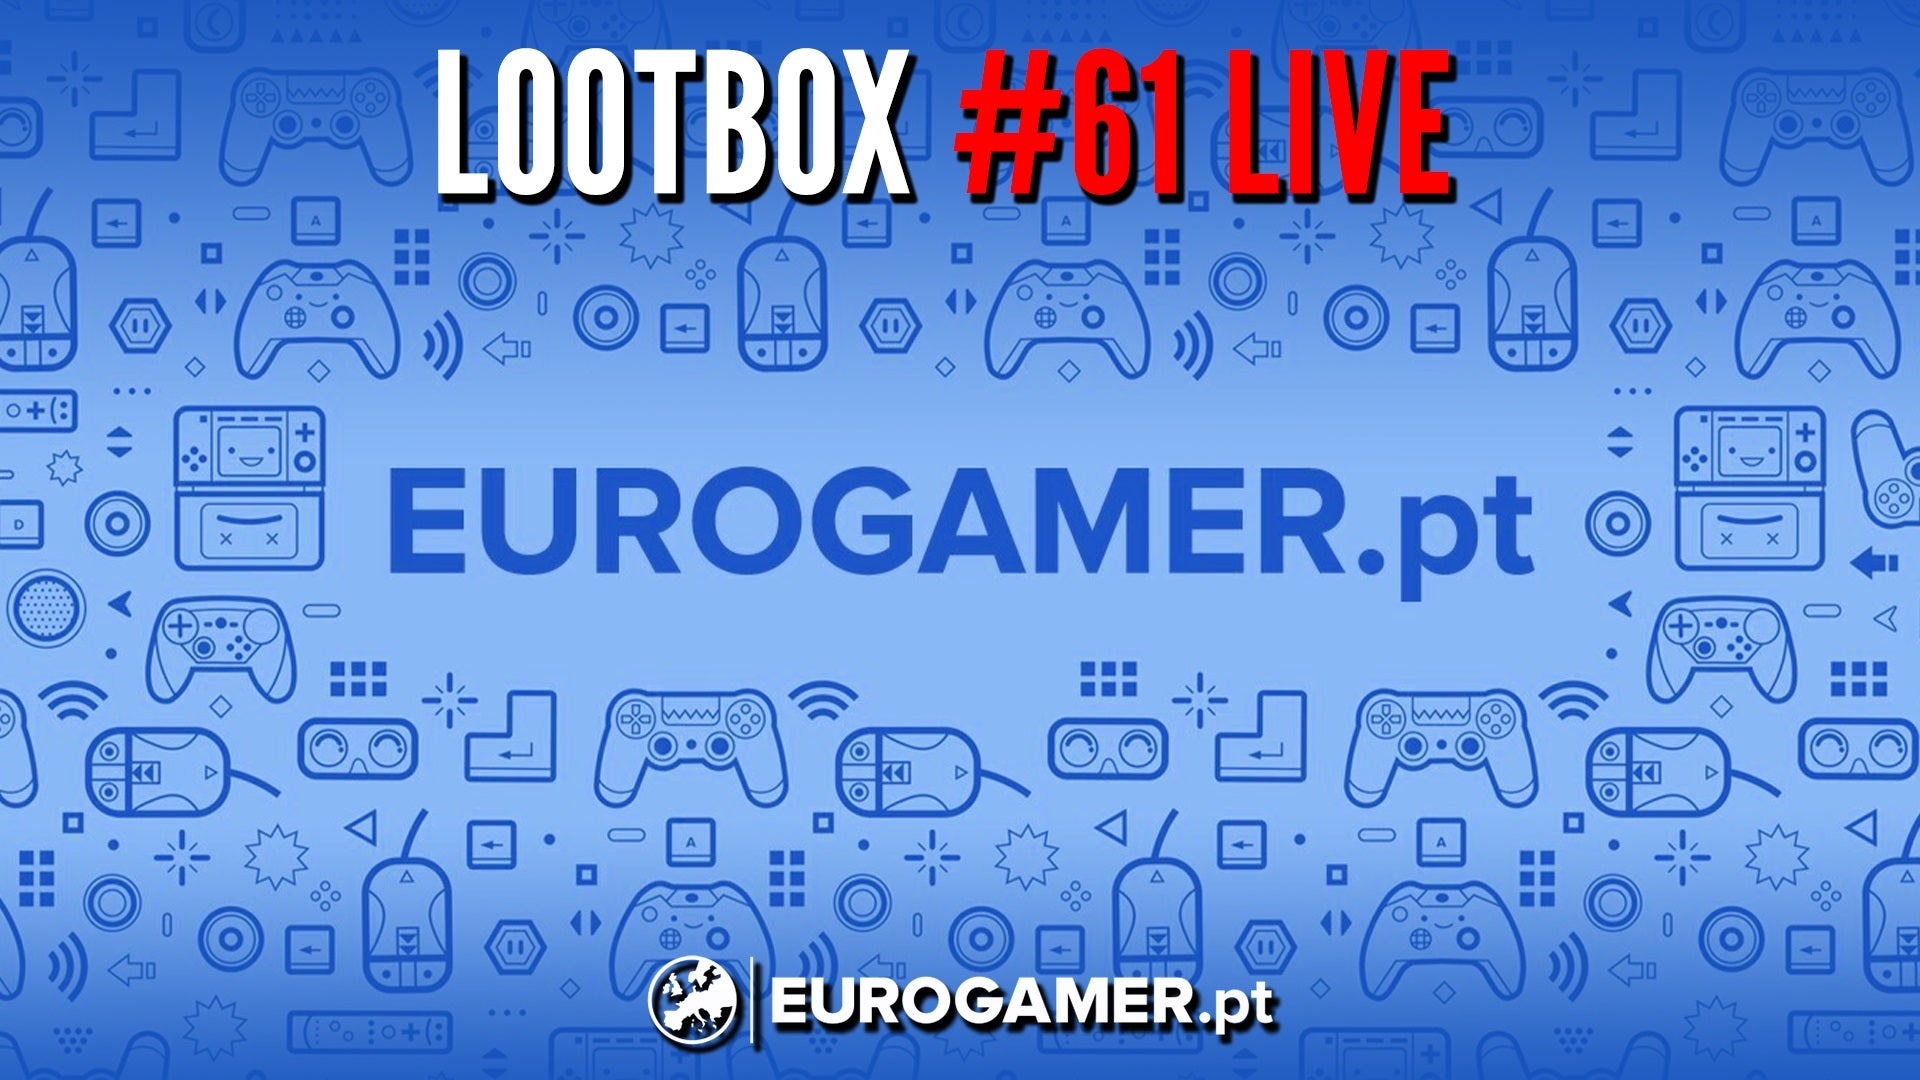 Imagem para Lootbox #61 LIVE - Novos headsets e monitores Sony, Need for Speed, God of War Ragnarök, gameplay Skate 4...